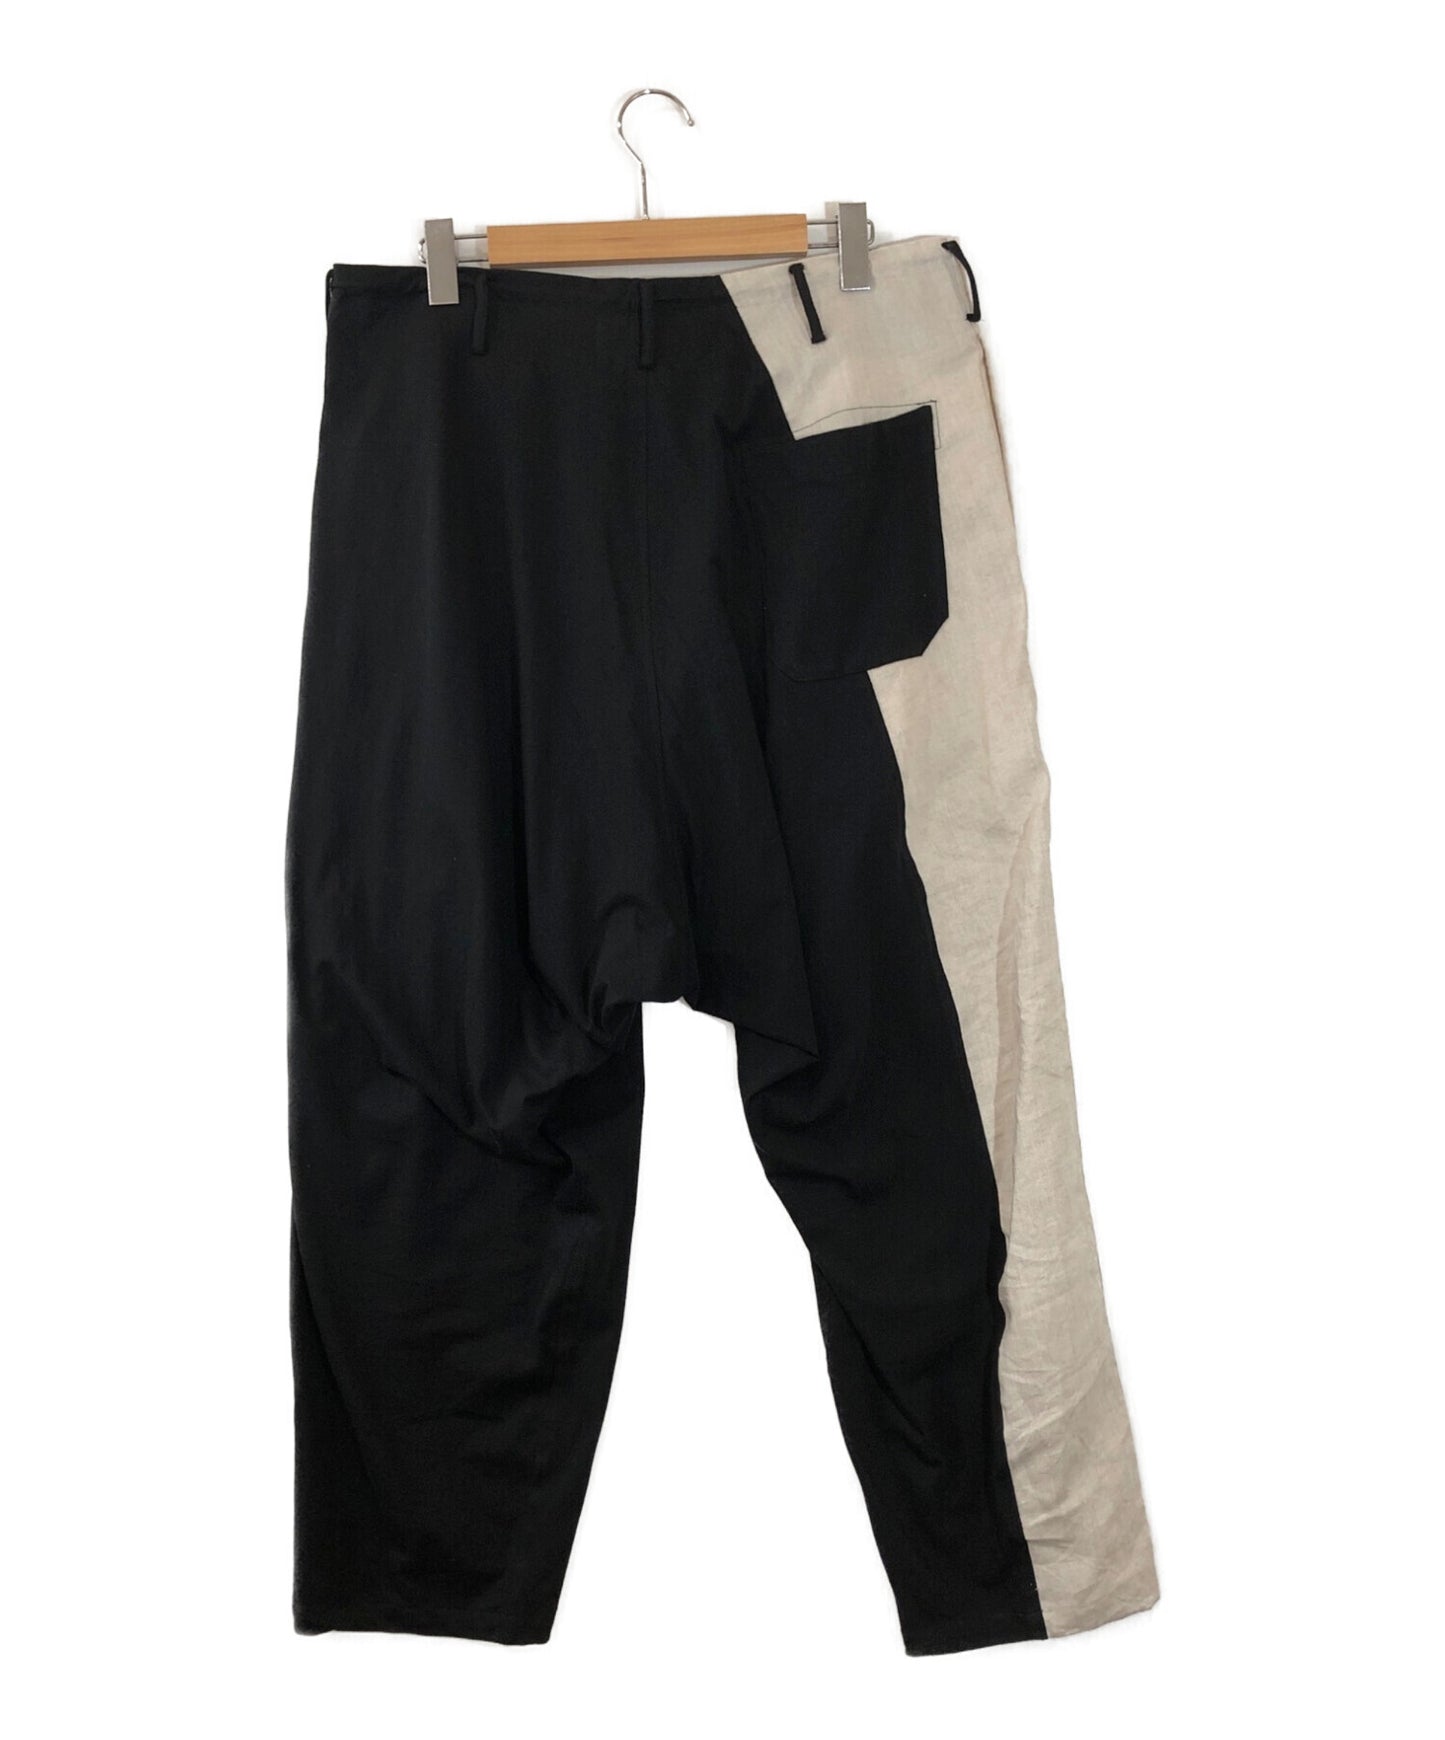 [Pre-owned] Y's PLAIN STITCH LINEN WRINKLED PLAIN Ys STITCH STRING SAROUEL PANTS Plain stitch linen wrinkle string sarouel pants YZ-P71-059